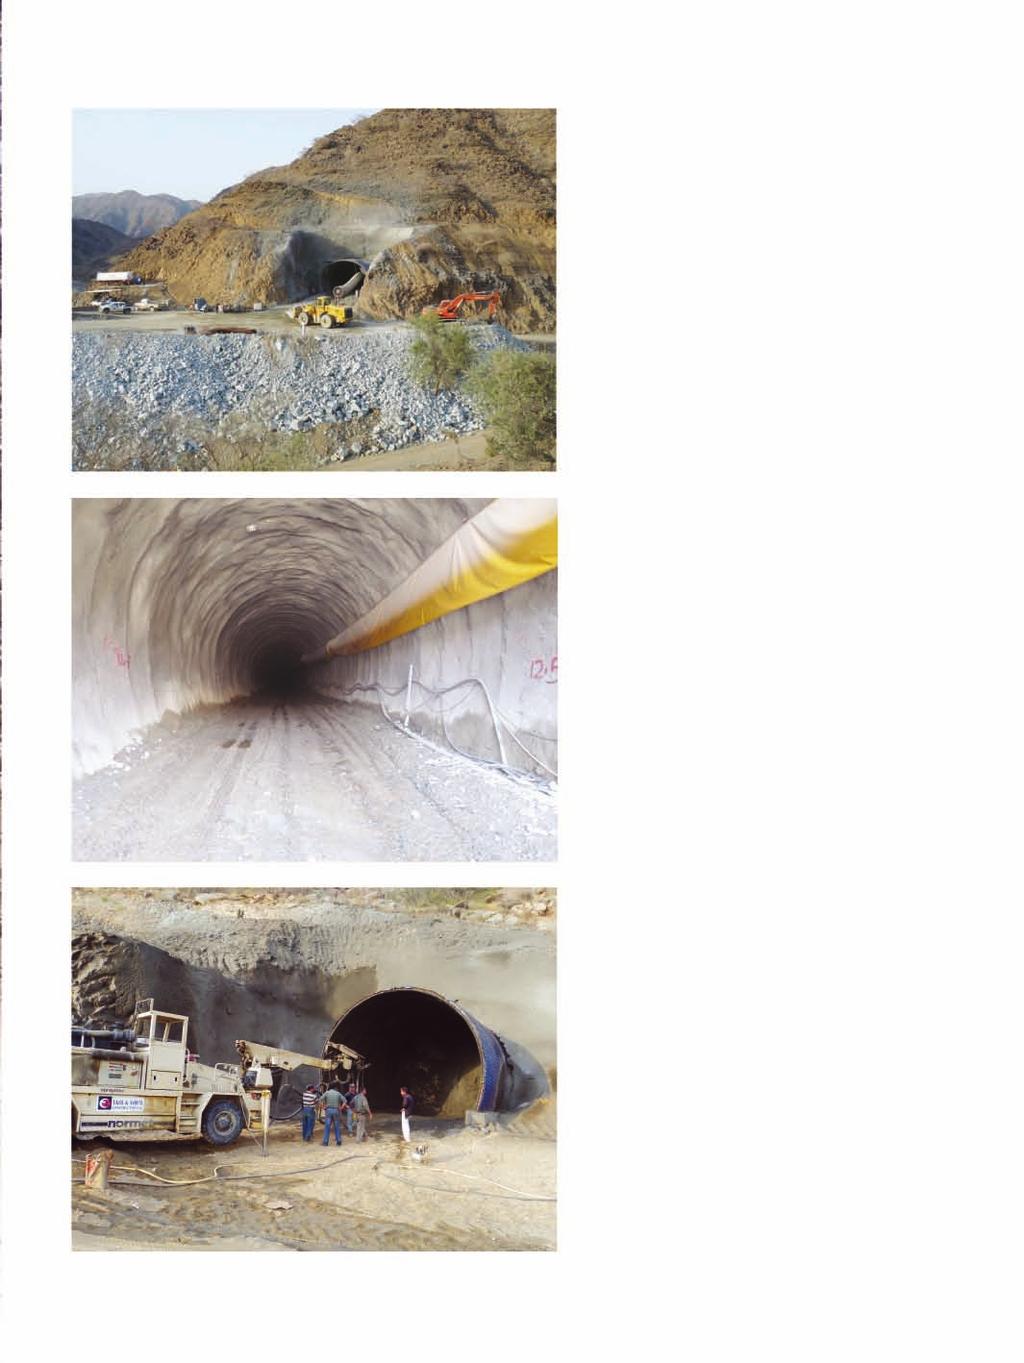 Shuqaiq - Abha Su Geçiş ve Servis Yolu Tünelleri Shuqaiq Abha Water Crossing and Service Road Tunnels Projenin Adı: Shuqaiq su geçiş tünelleri Proje Açıklaması: Su boru hattı geçişi tünelleri 5 ayrı